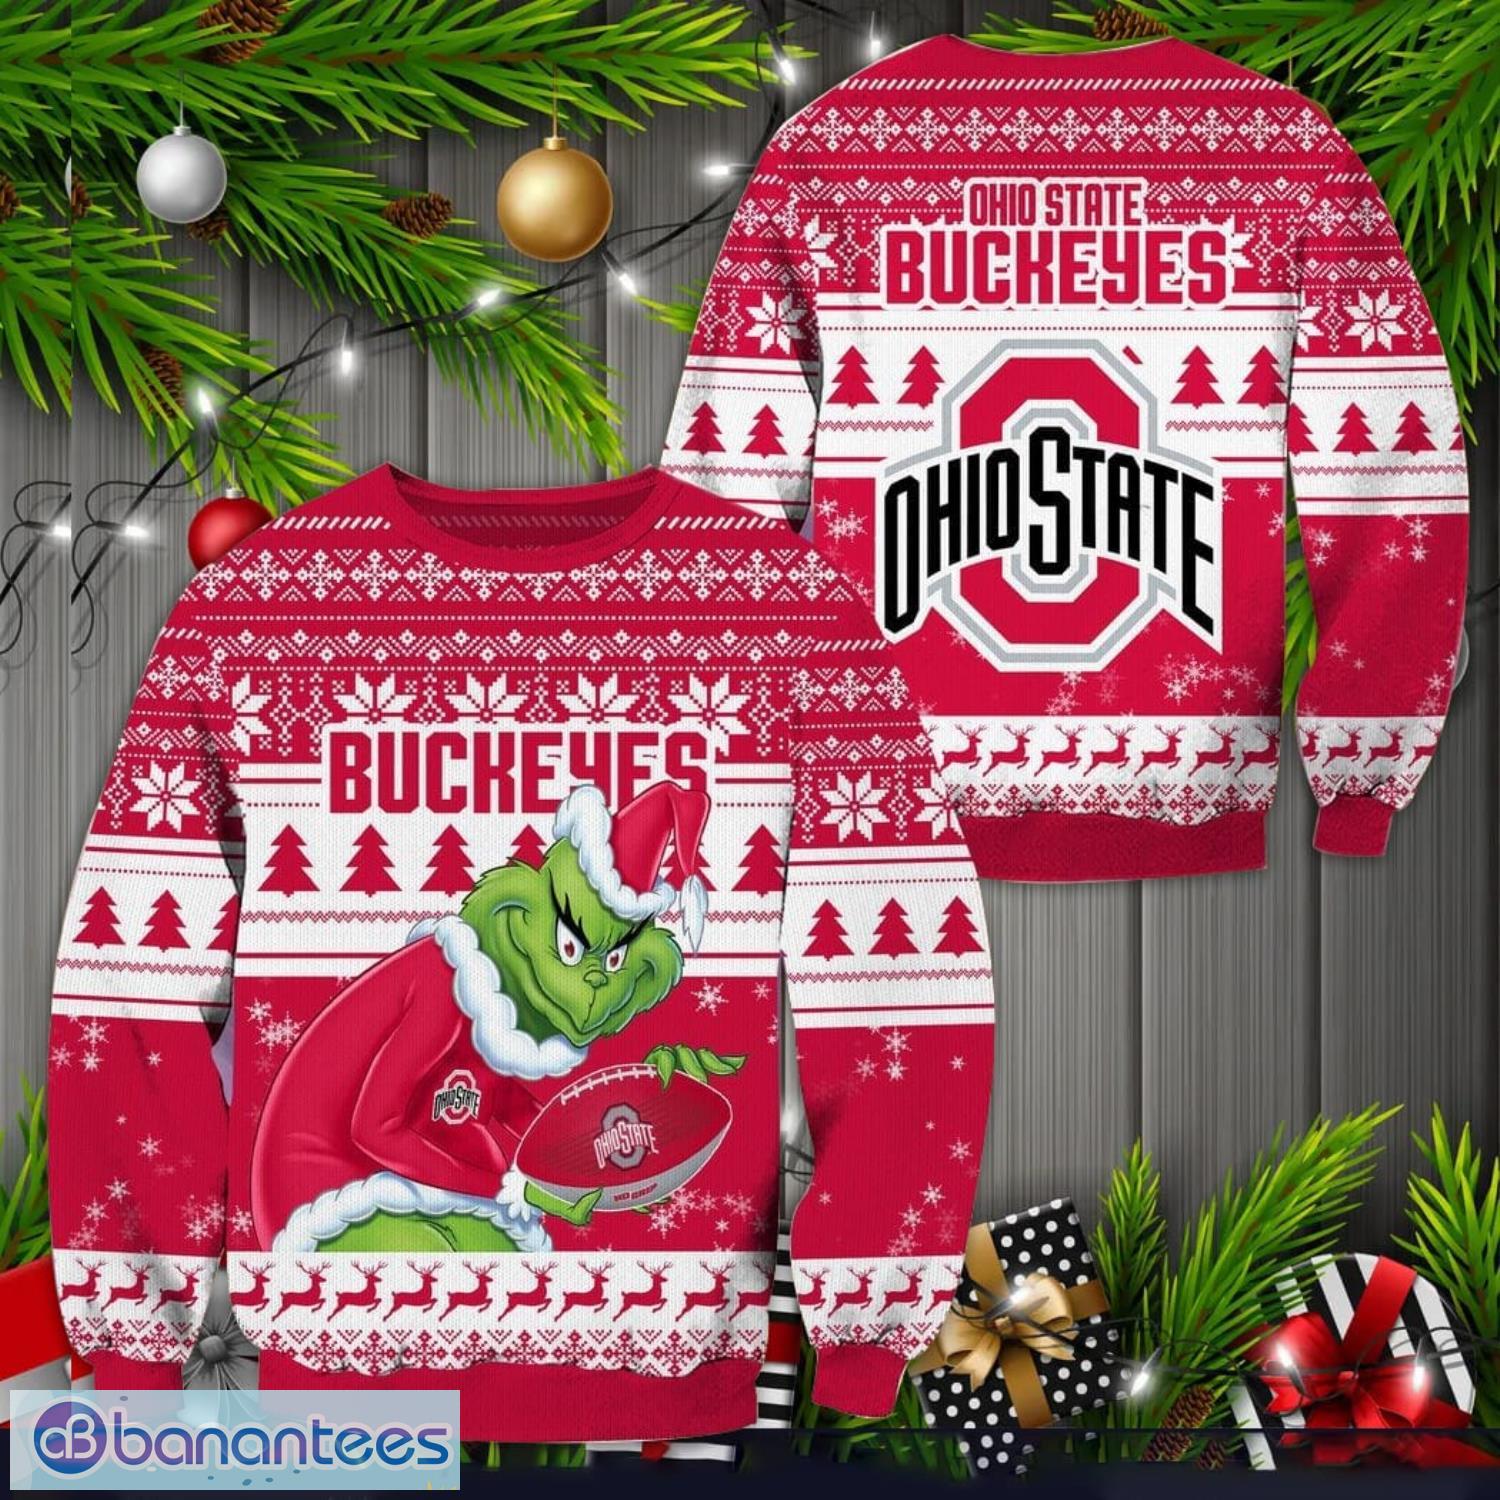 Ohio State Buckeyes holiday gift ideas